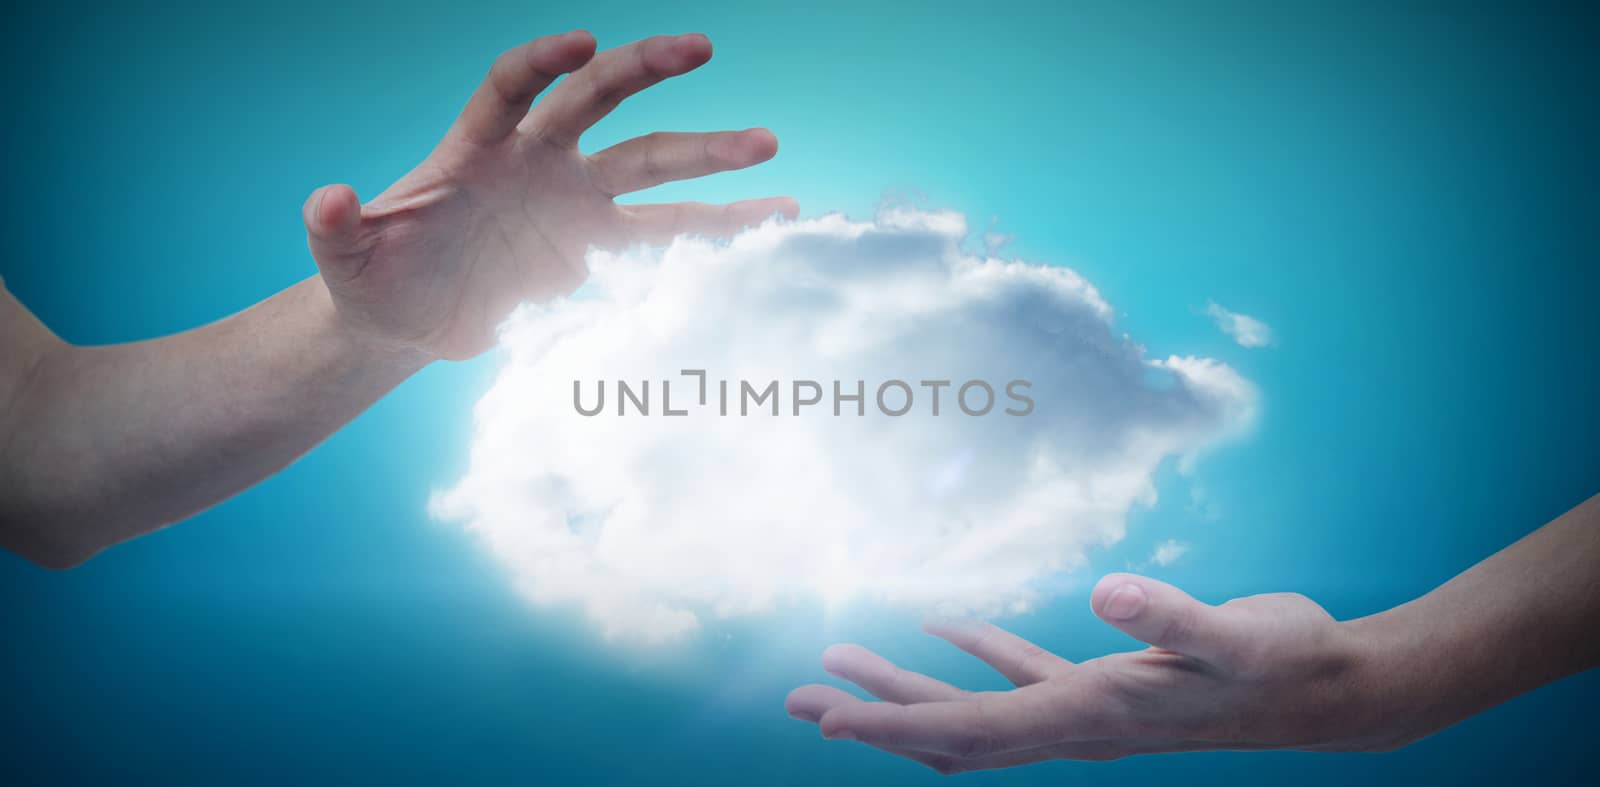 Hands gesturing against white background against blue vignette background